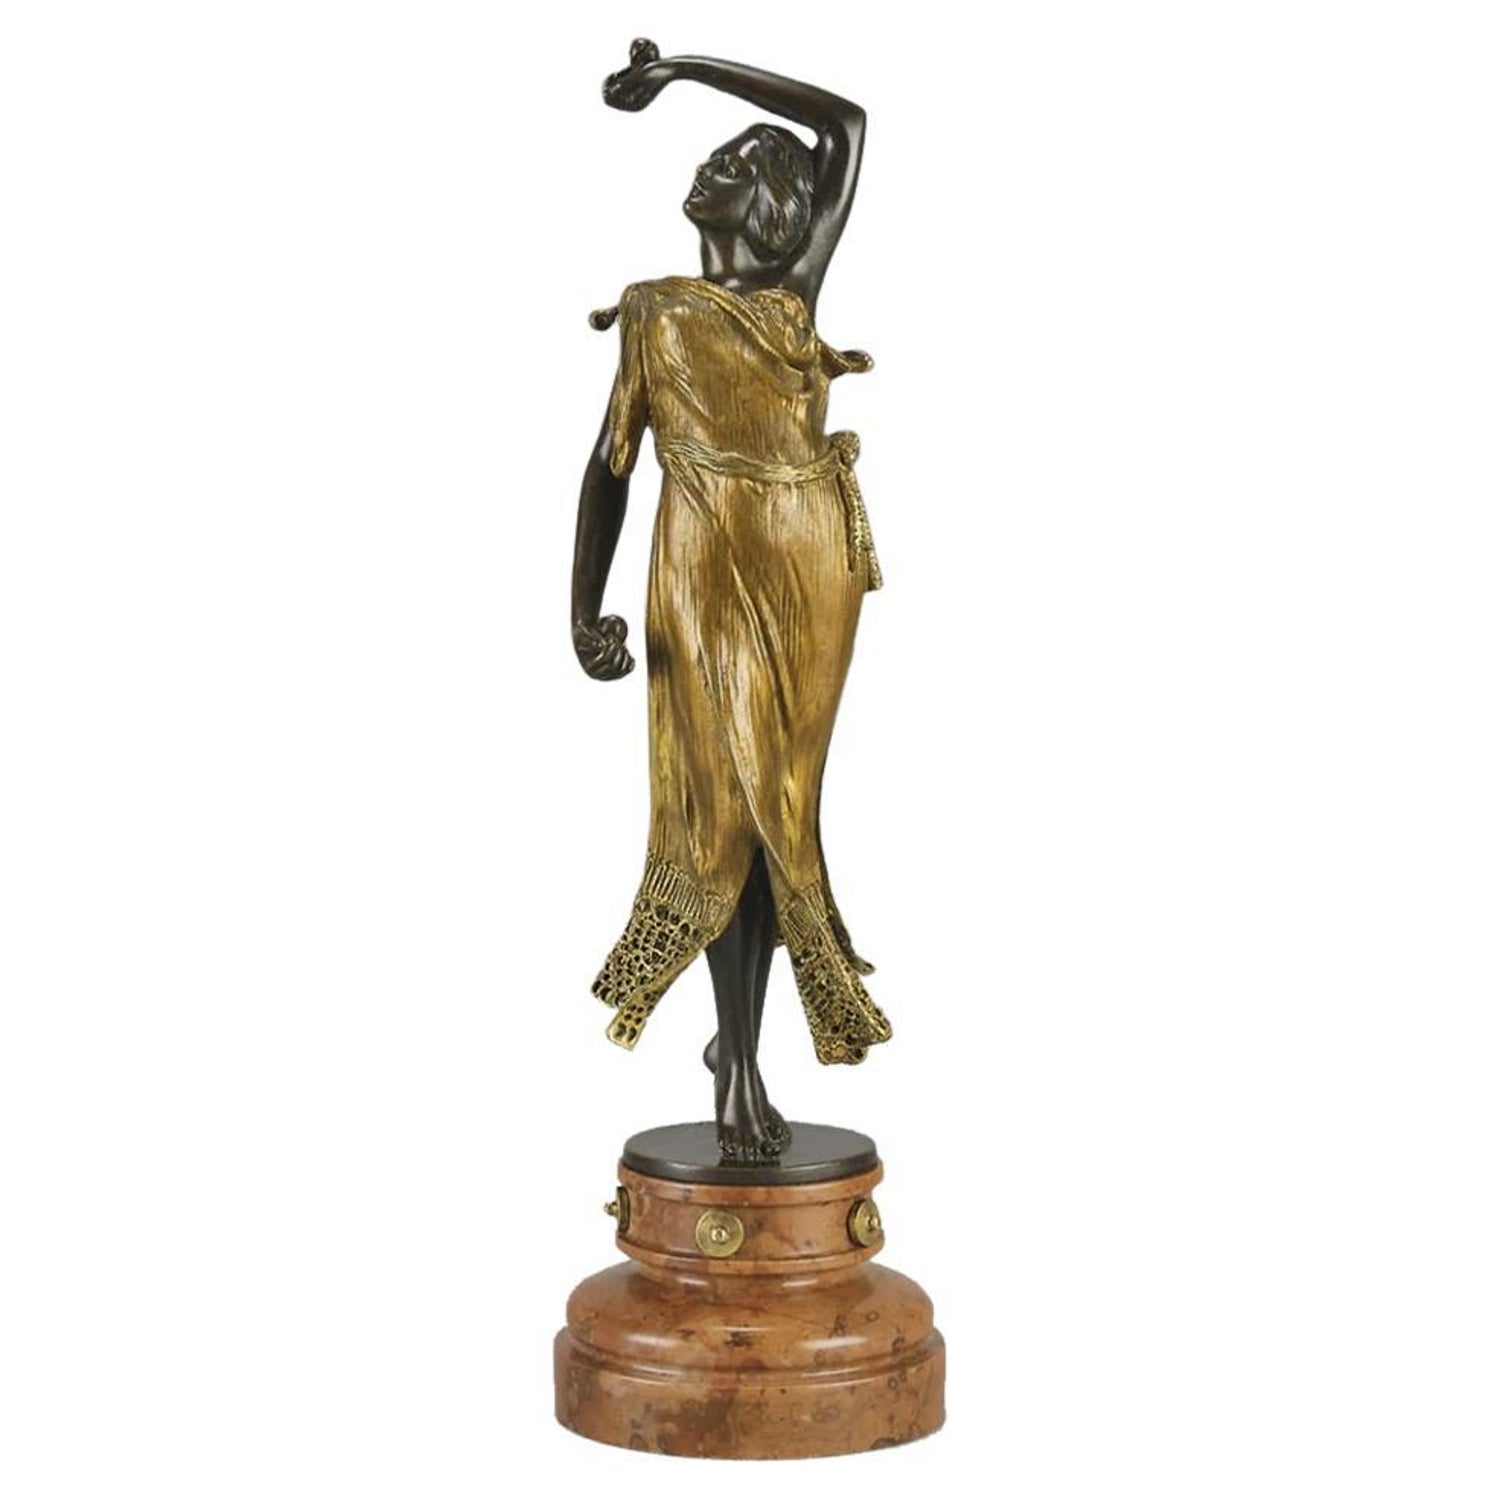 Early 20th Century Art Nouveau Bronze Entitled "La Jeuneuse" by Antonin  Carlès For Sale at 1stDibs